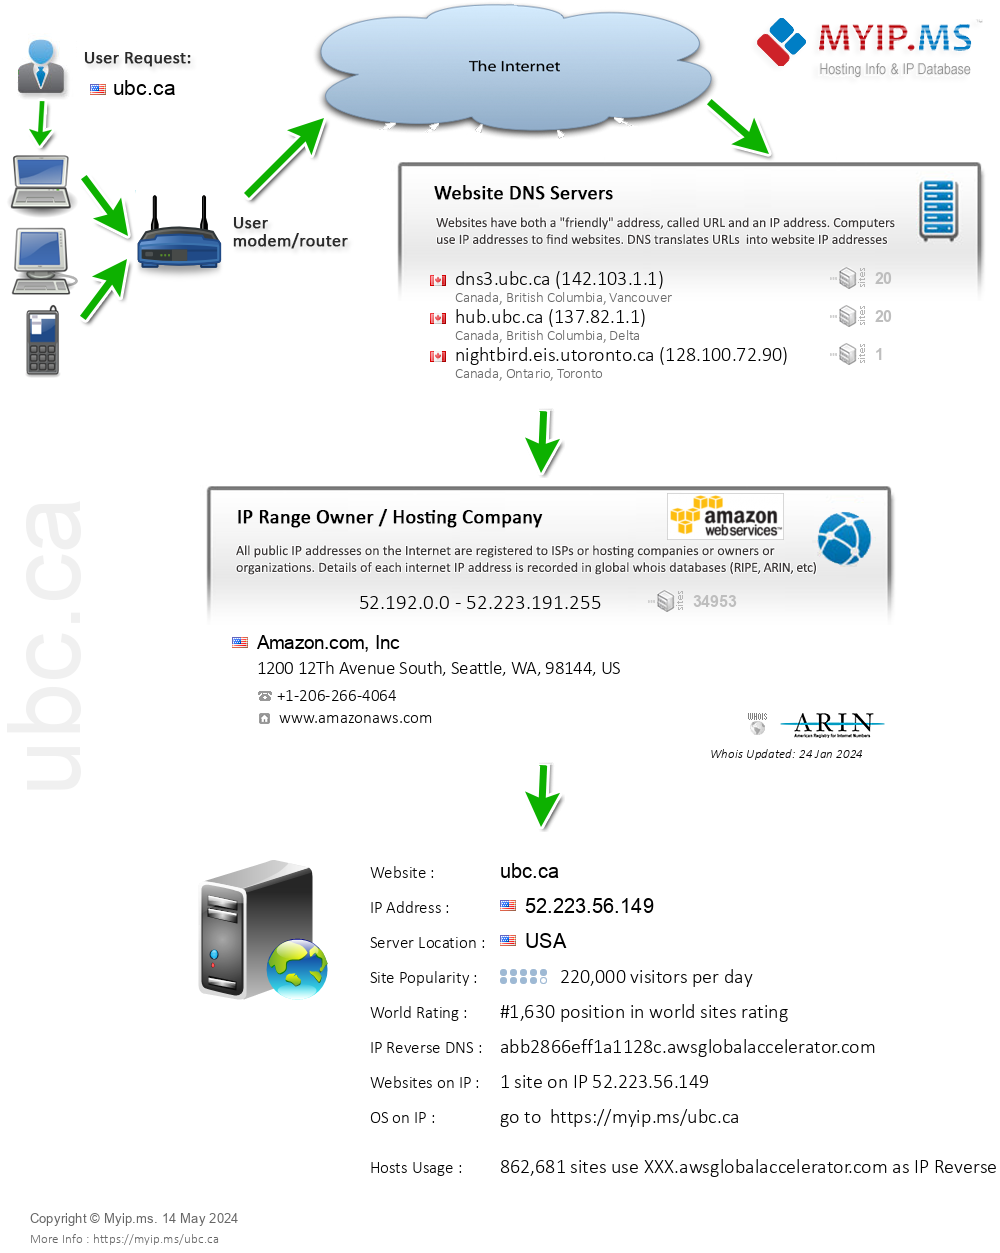 Ubc.ca - Website Hosting Visual IP Diagram